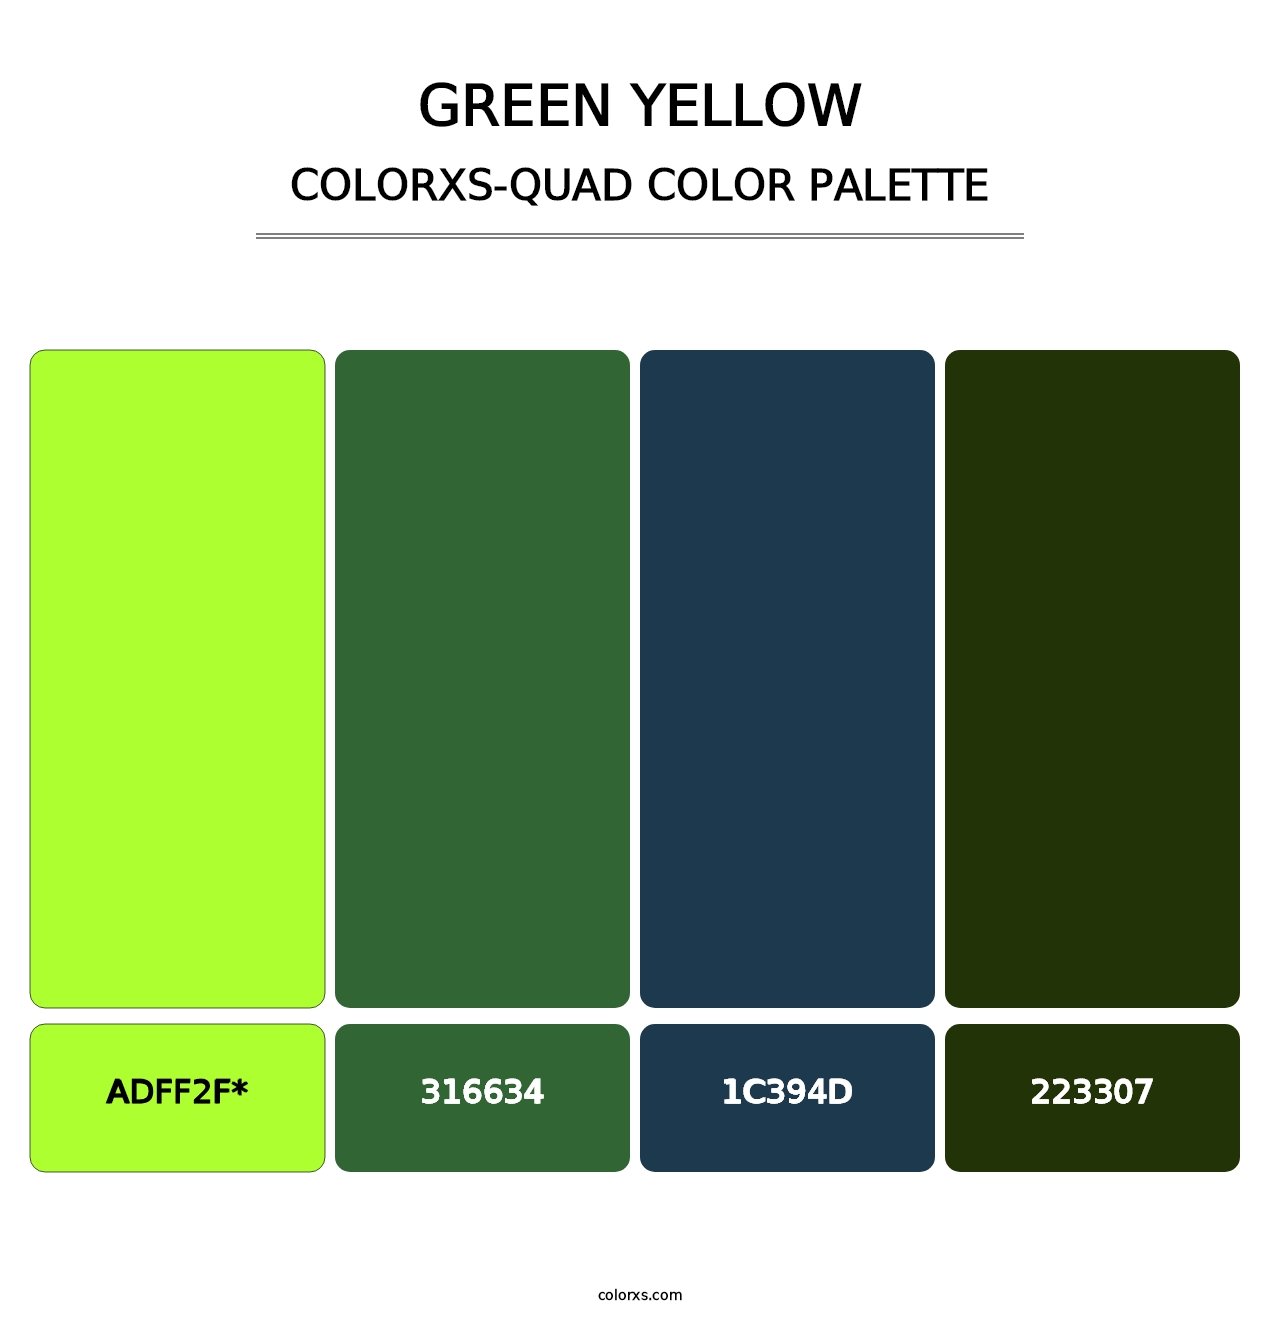 Green Yellow - Colorxs Quad Palette